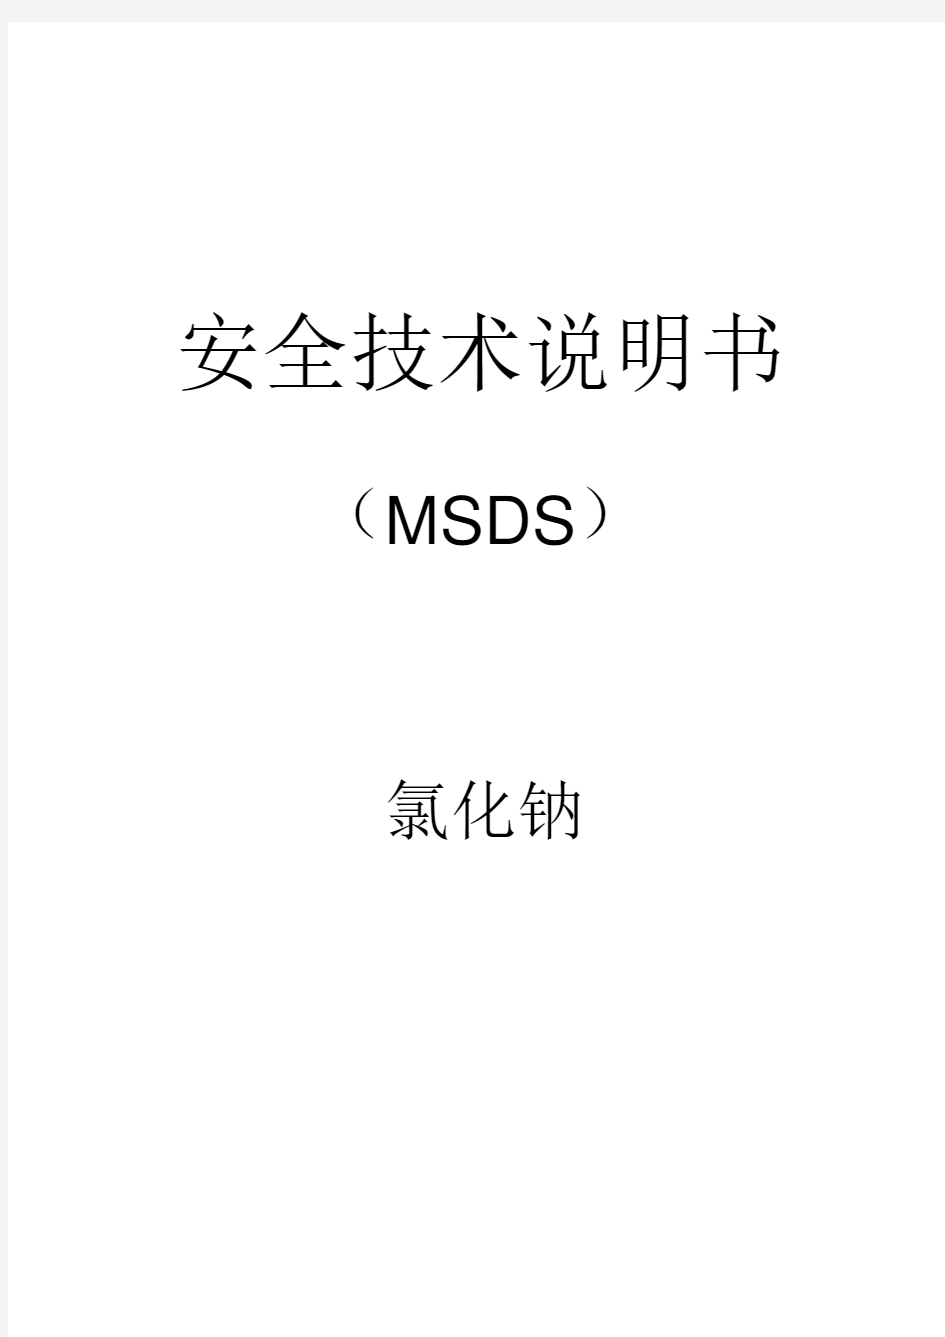 氯化钠(盐)MSDS